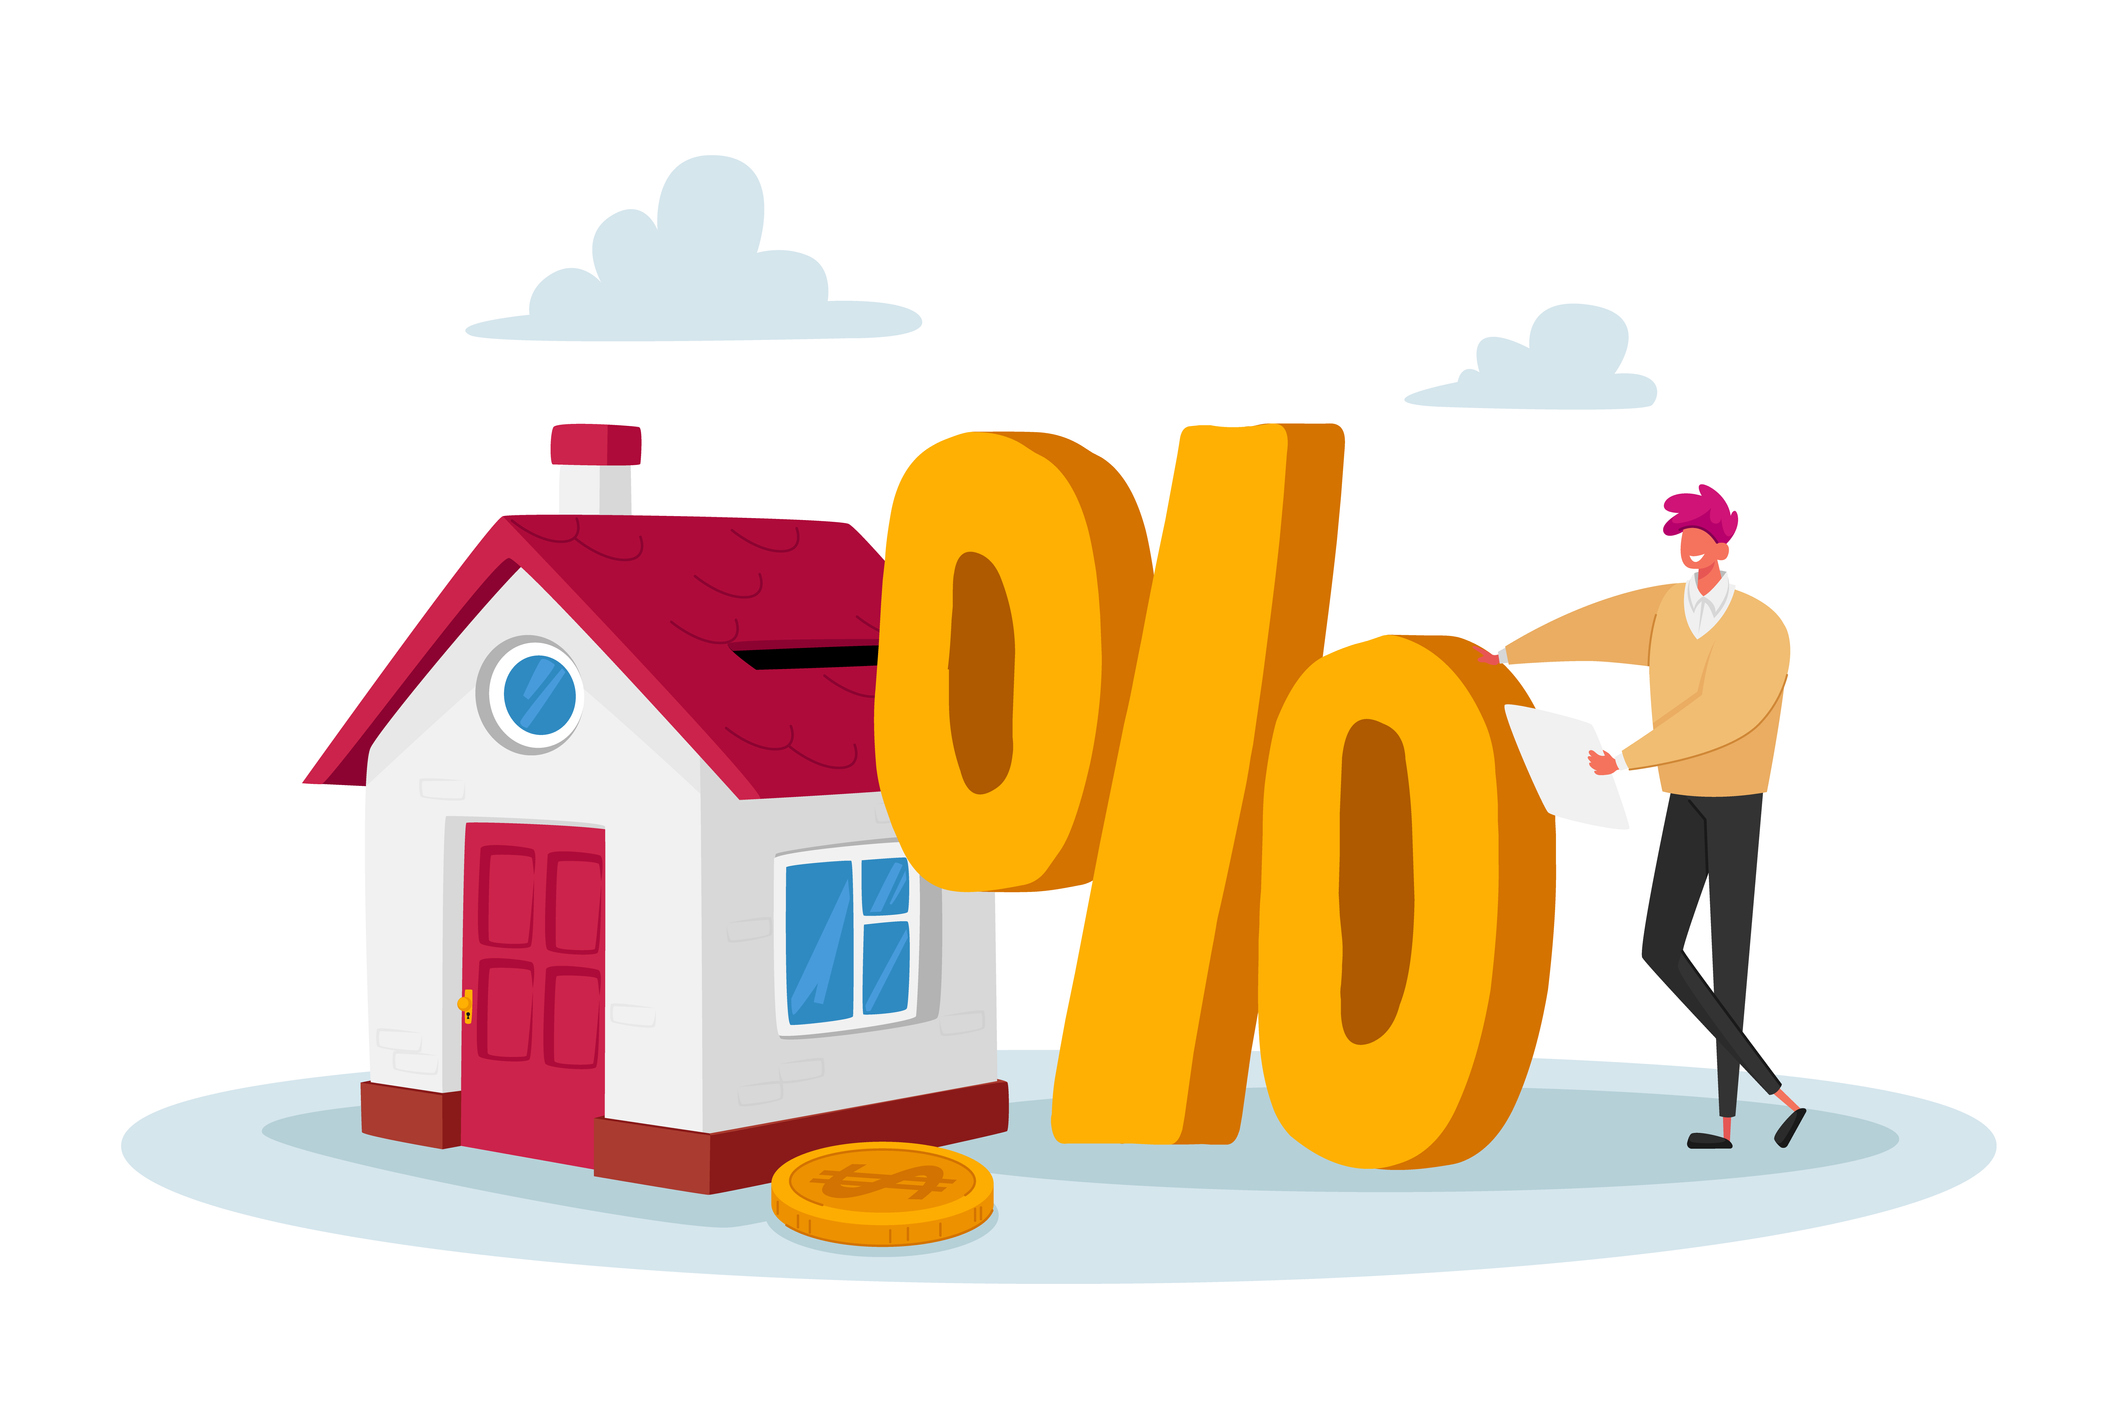 Canada mortgage rates